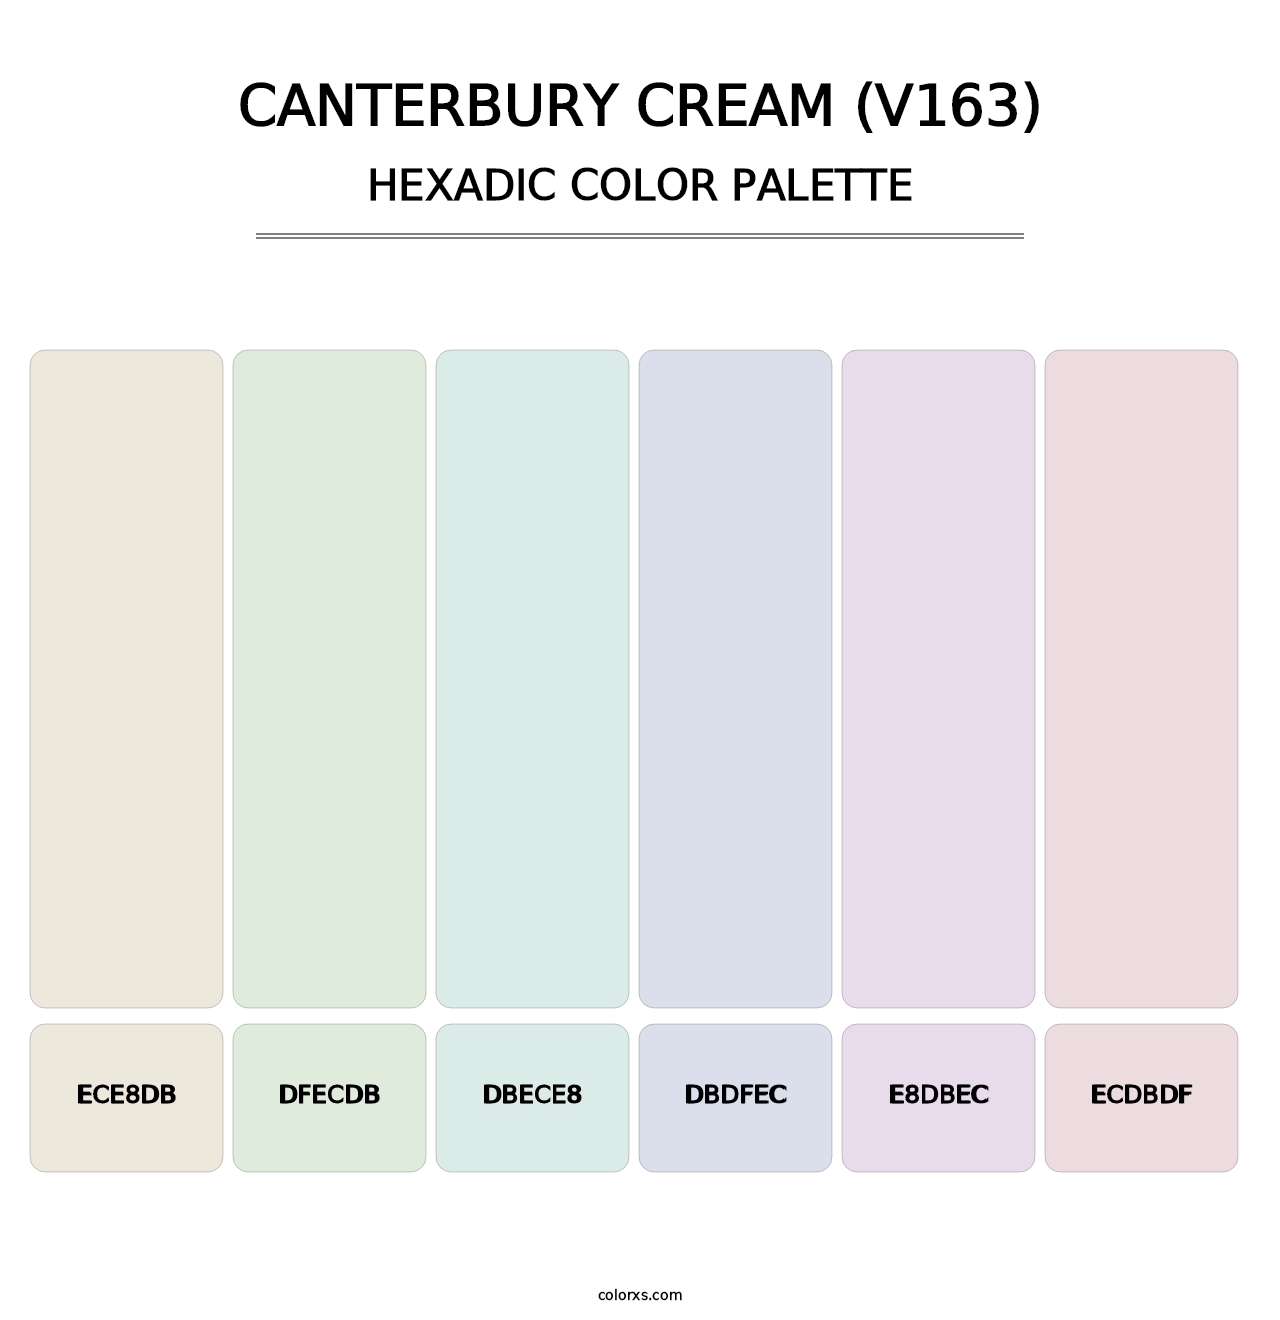 Canterbury Cream (V163) - Hexadic Color Palette